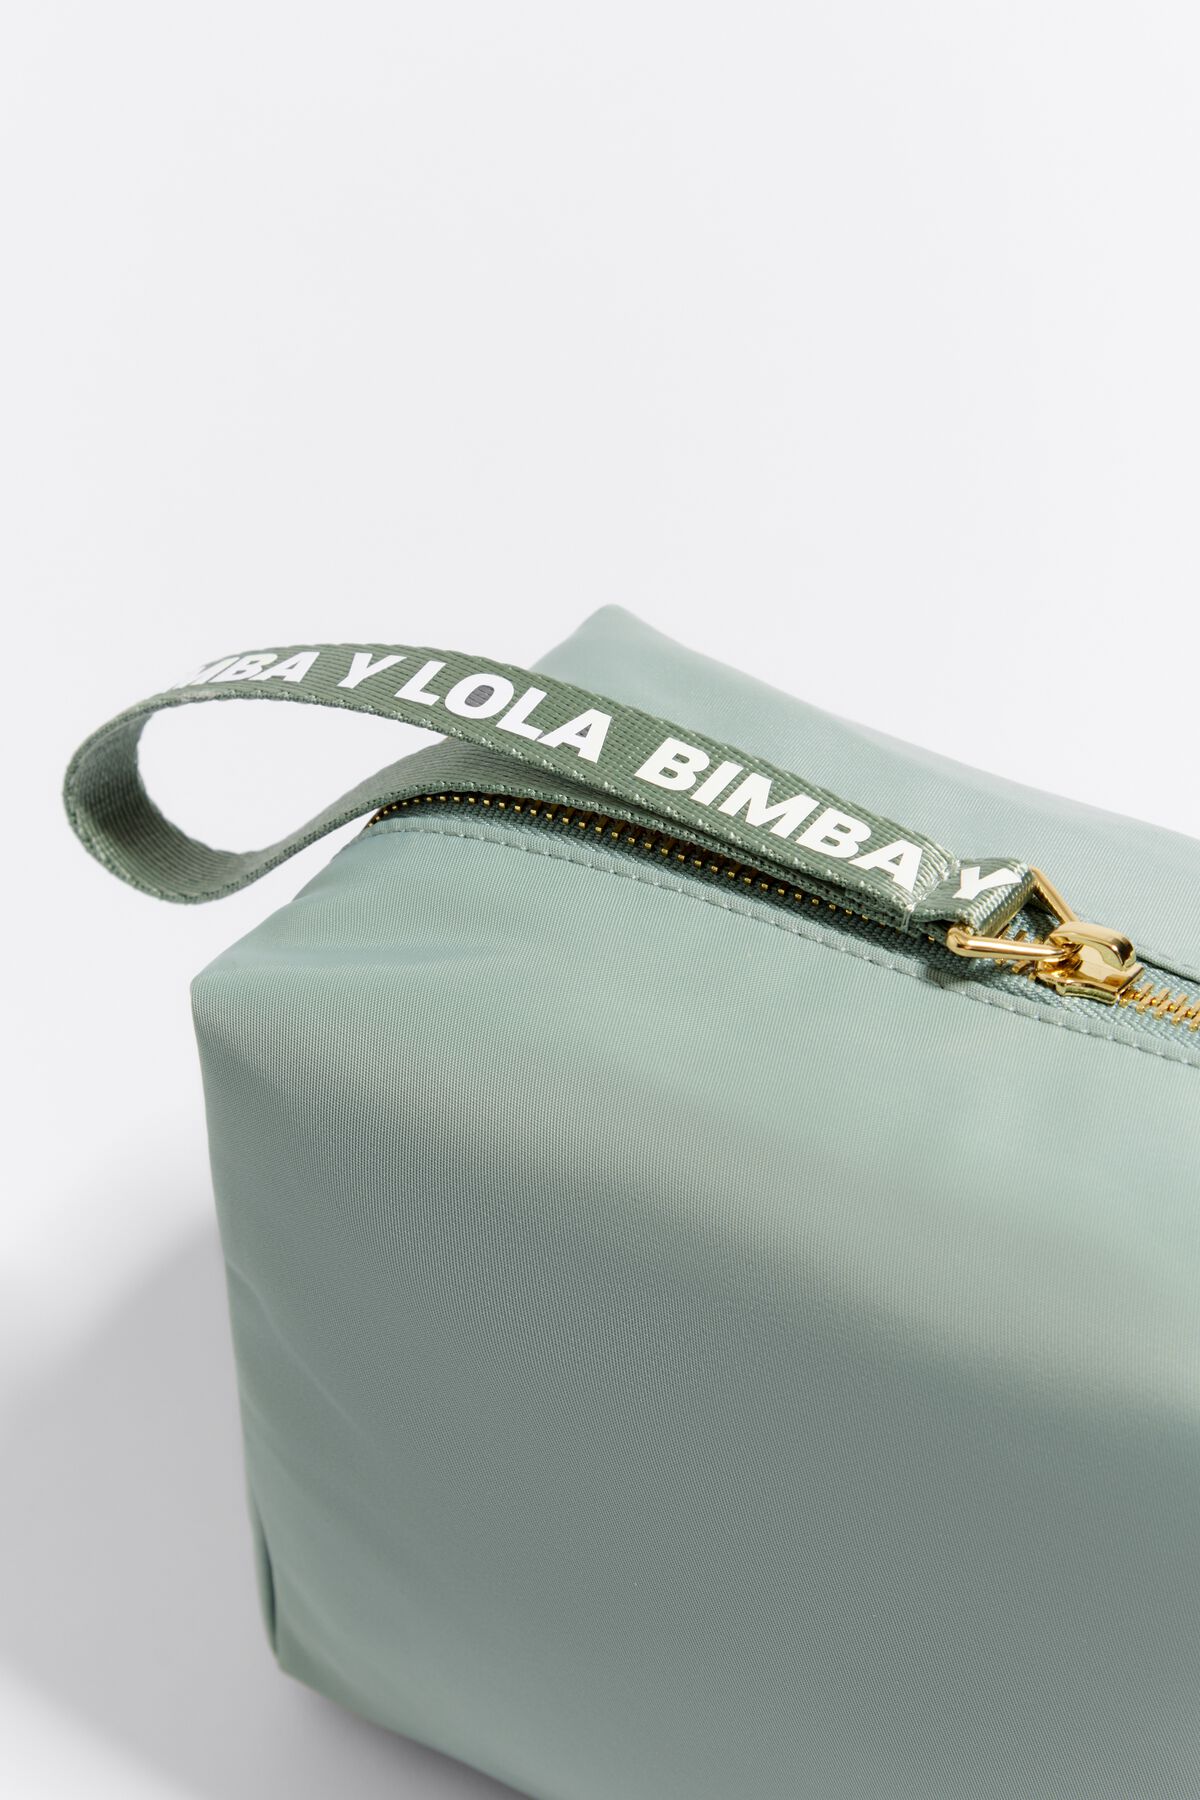 Bimba y Lola, Bags, Bimba Y Lola Cosmetic Bag